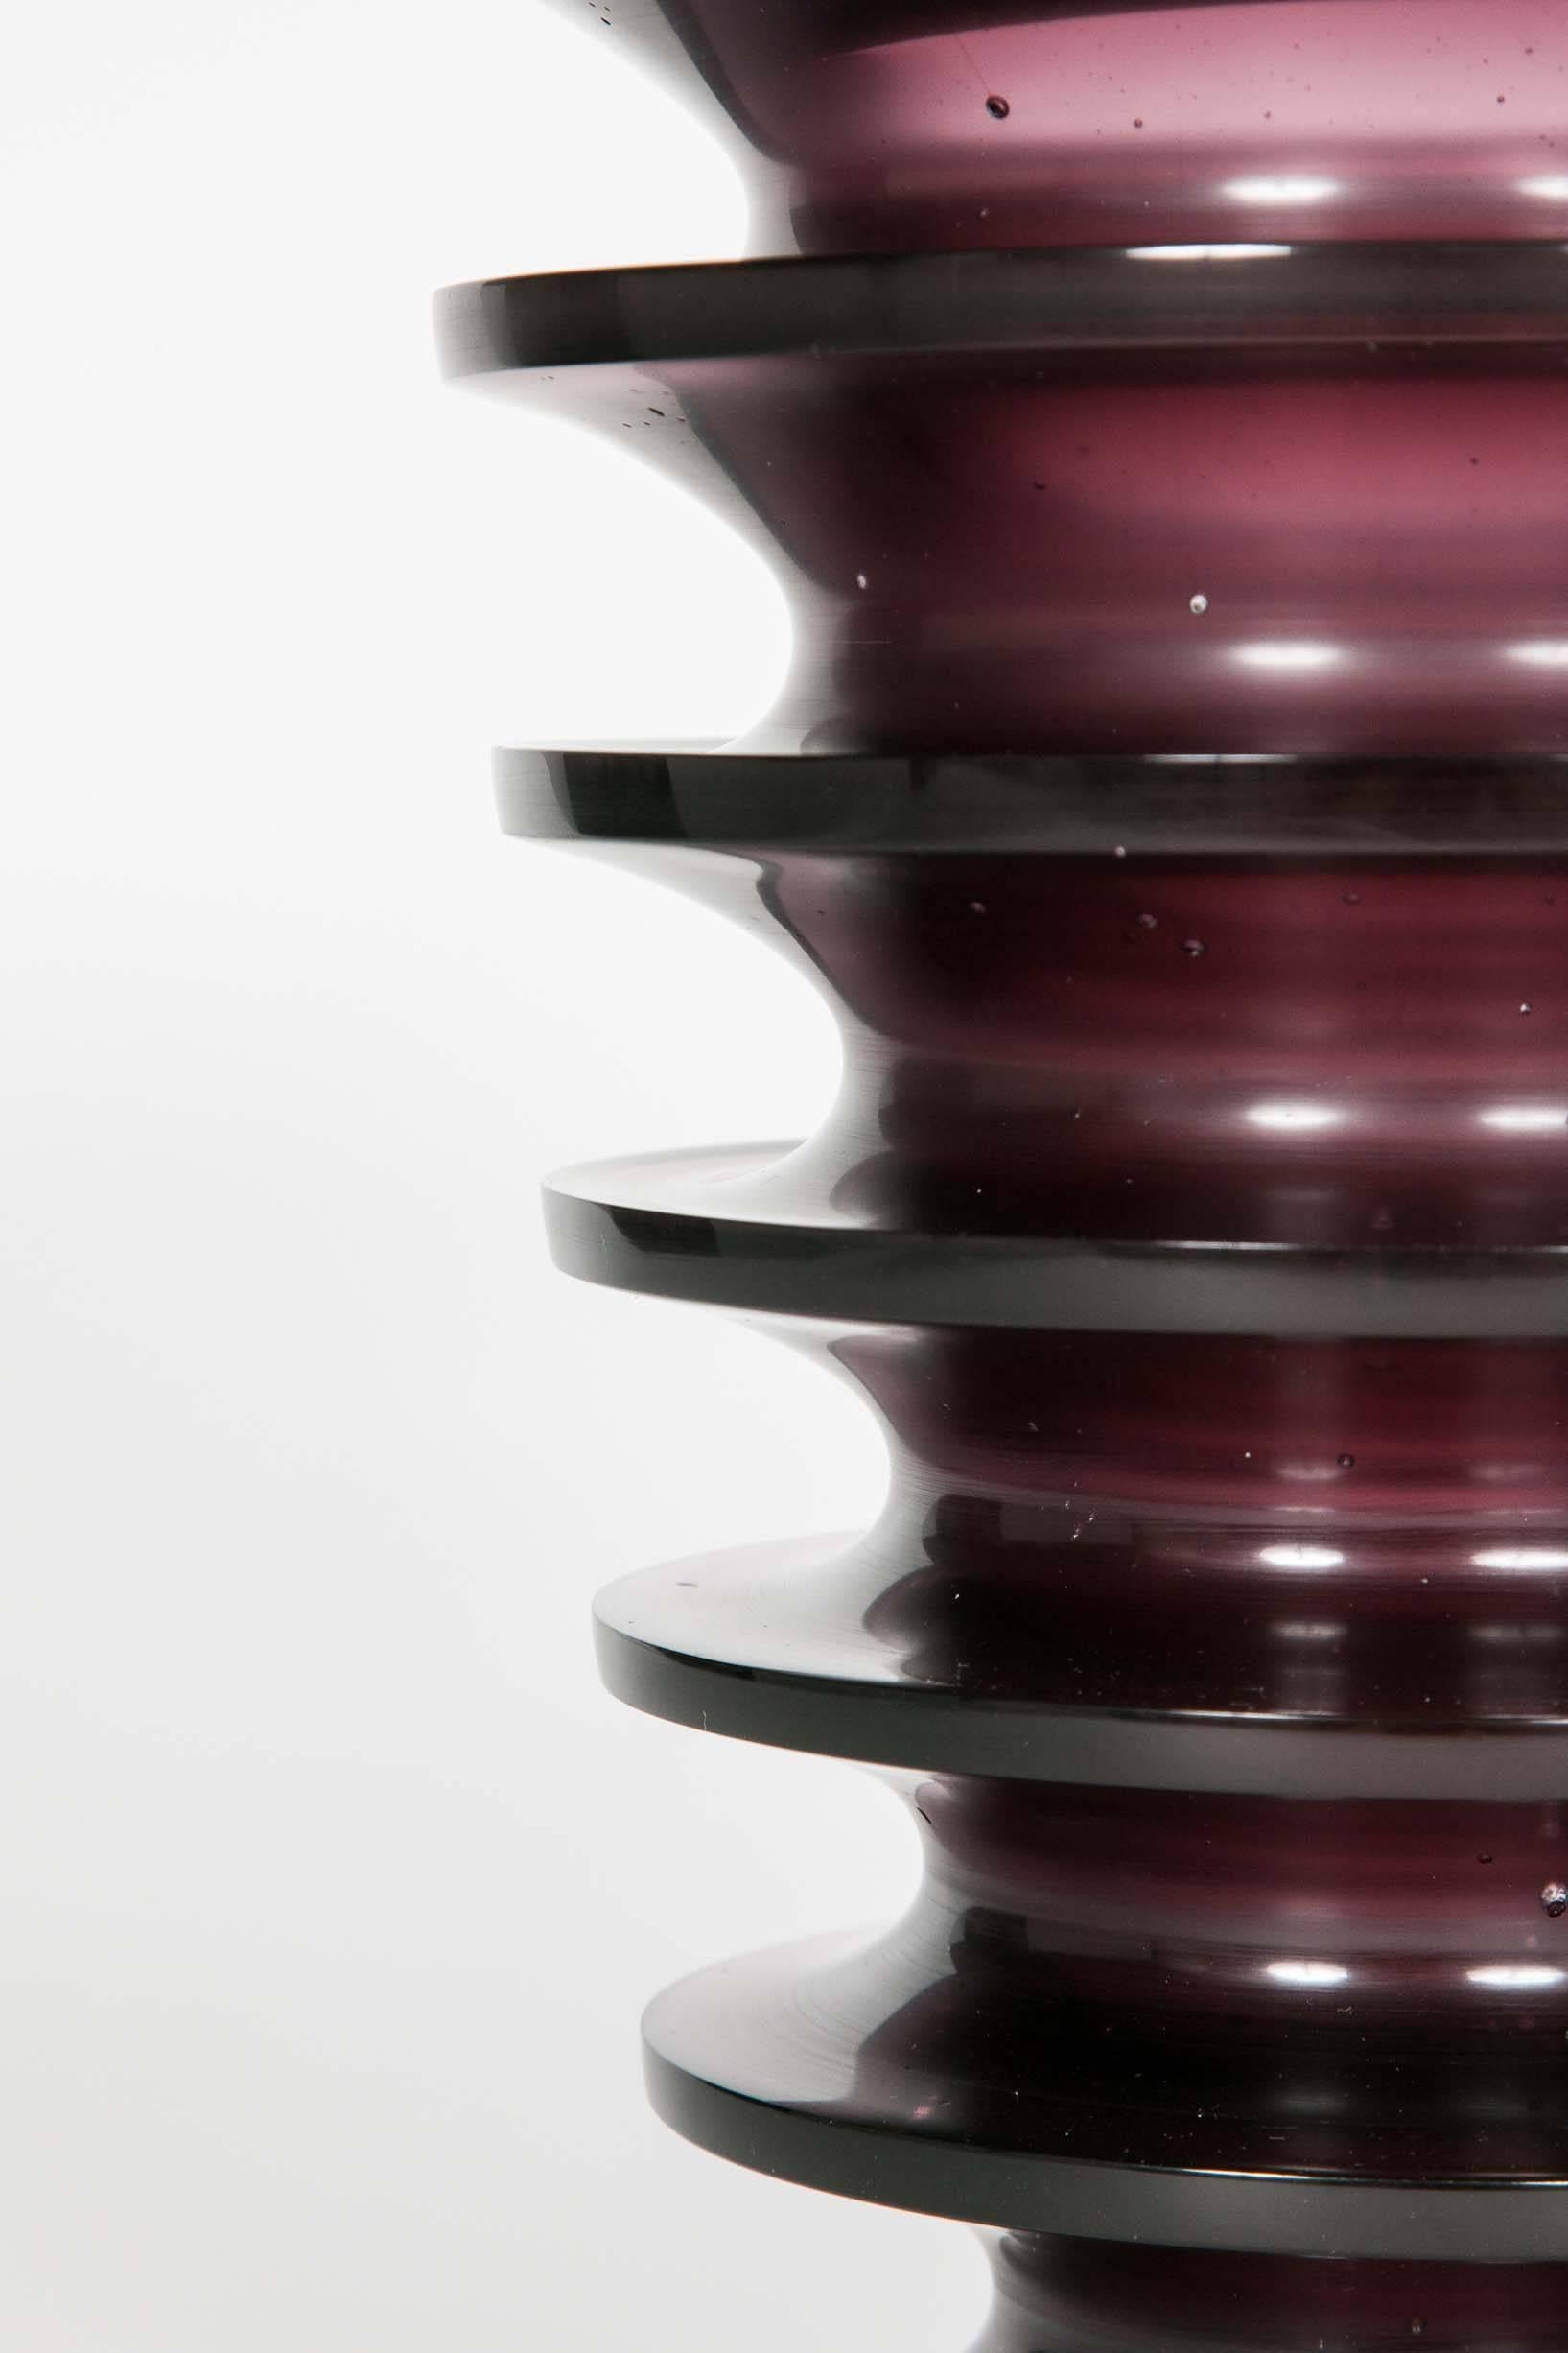 Modern Leila, a unique dark purple / blackberry coloured glass vase by Paul Stopler